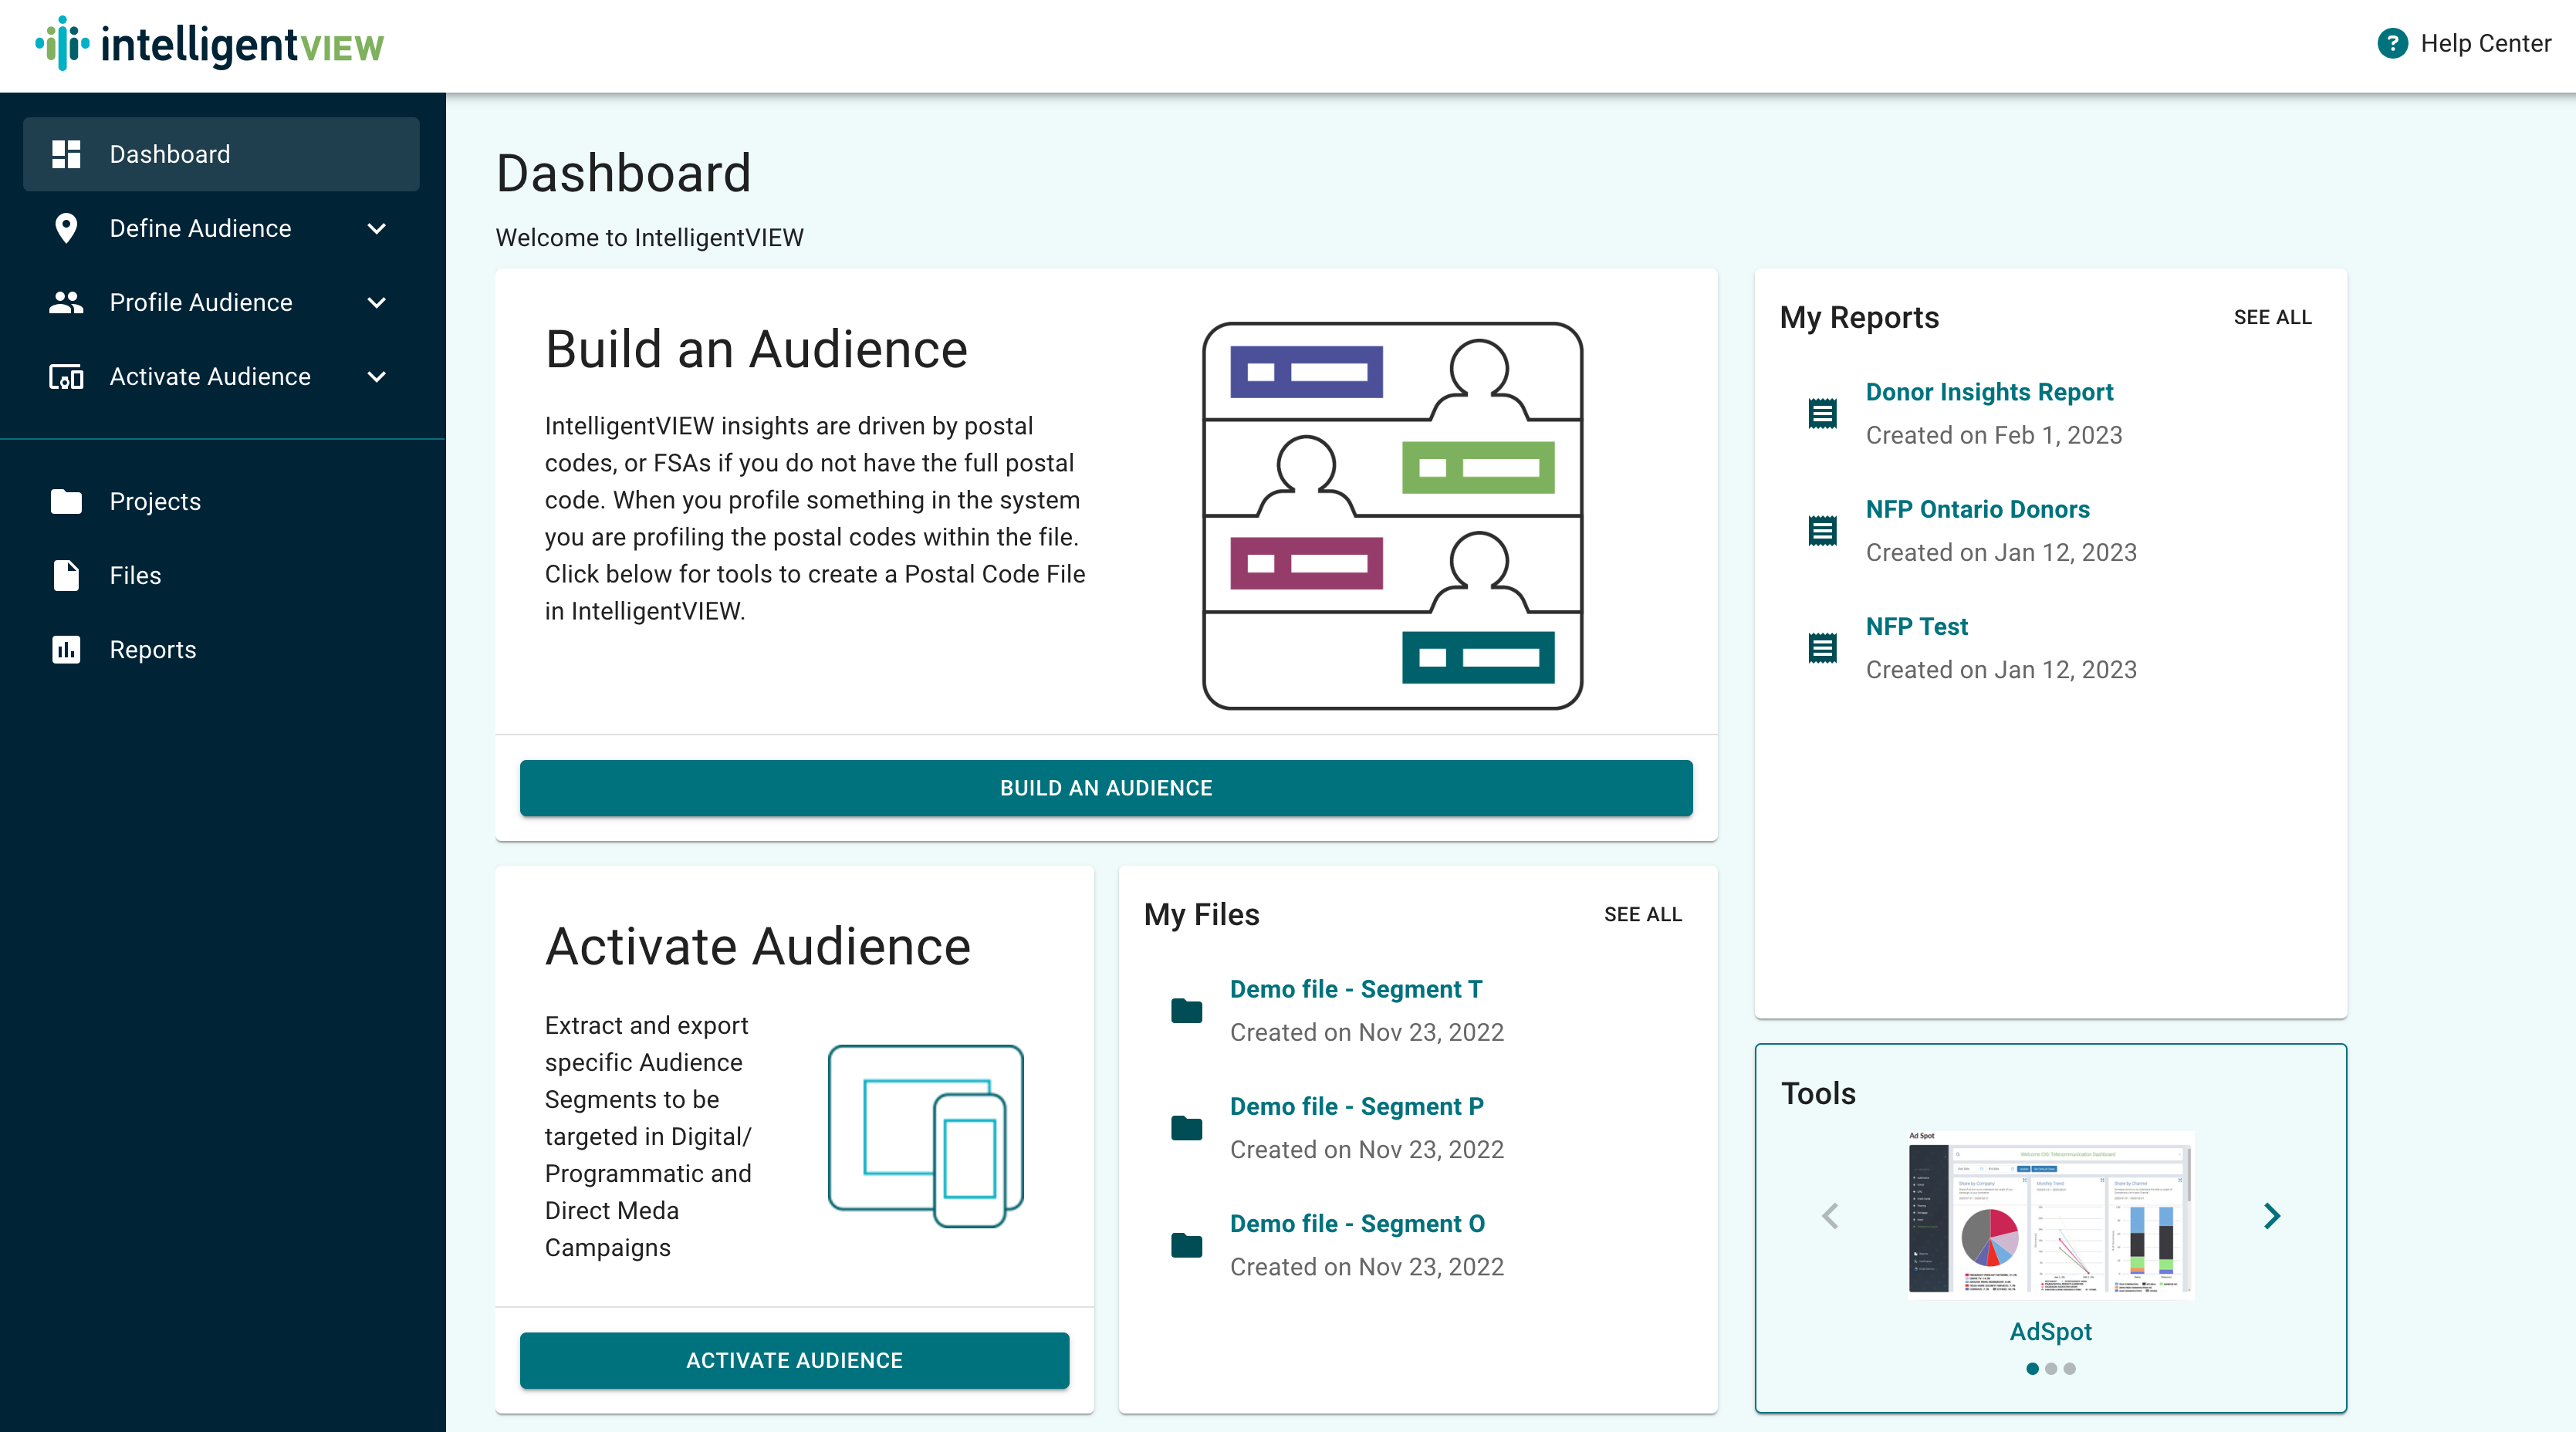 intelligentVIEW audience insights platform and media activation dashboard screenshot.